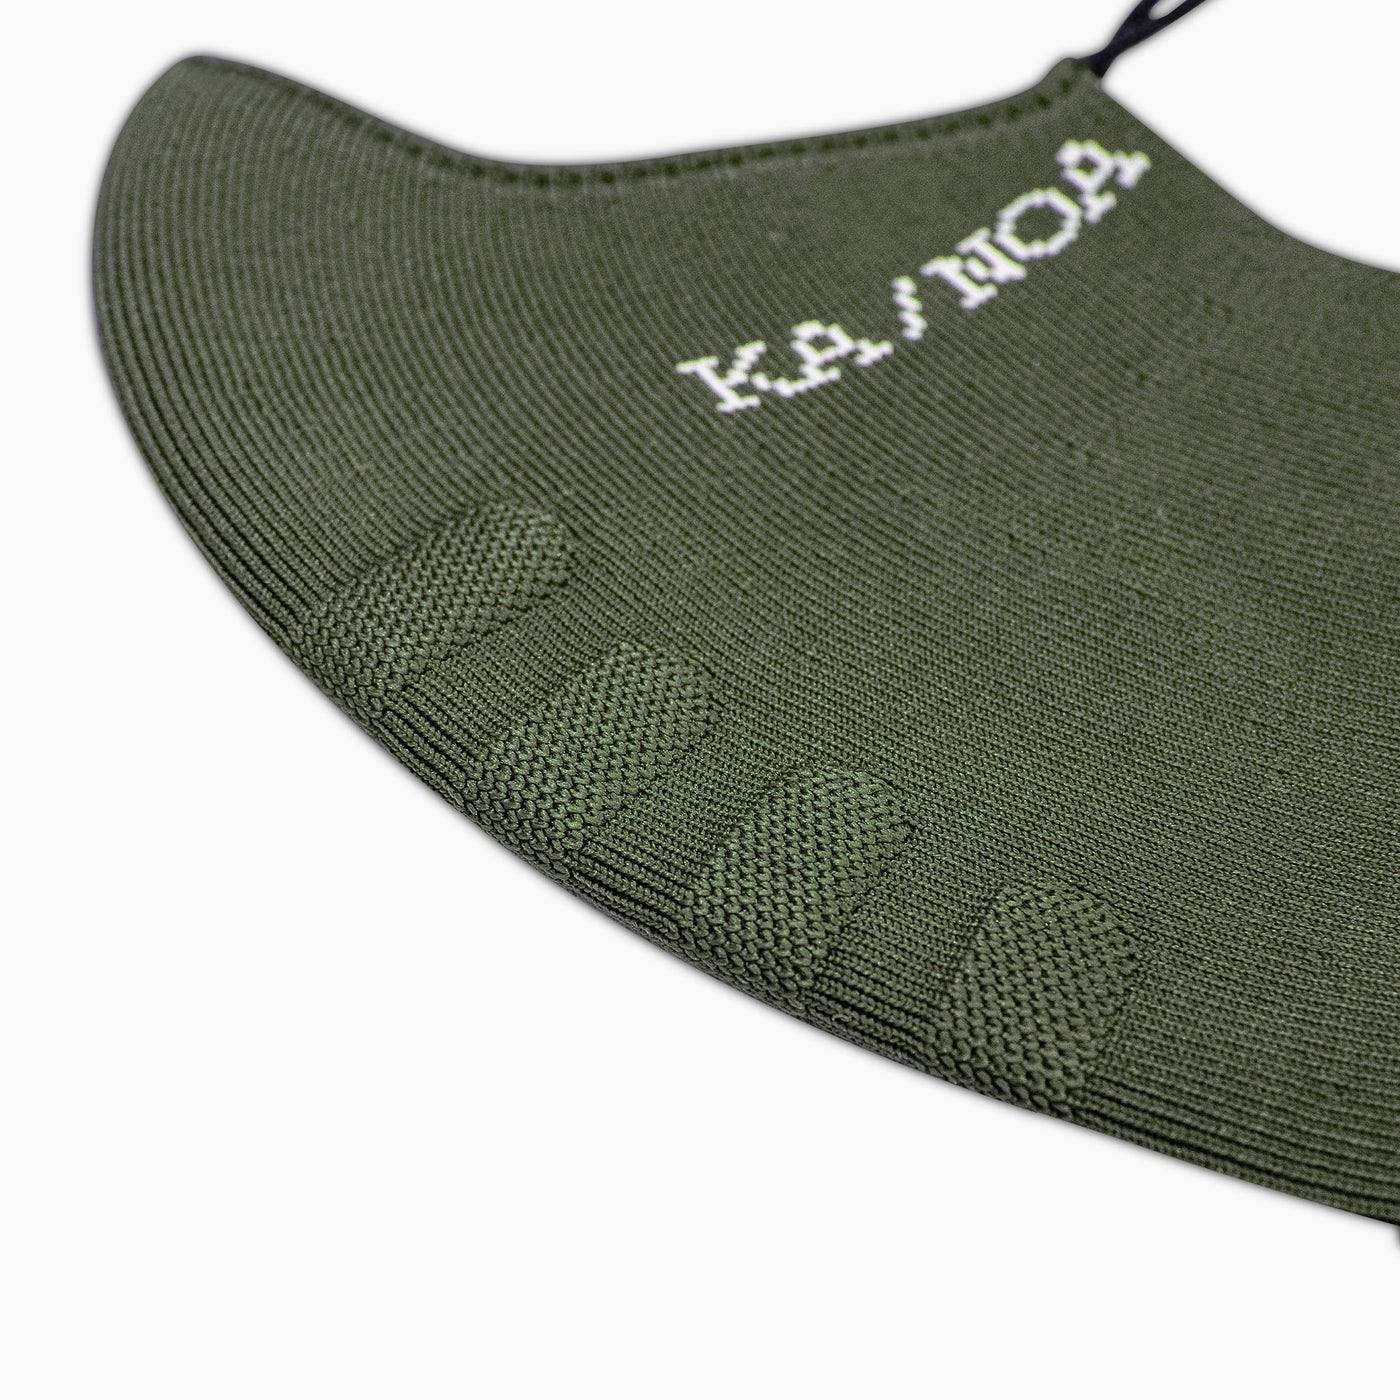 KA/NOA Facemask (military green)